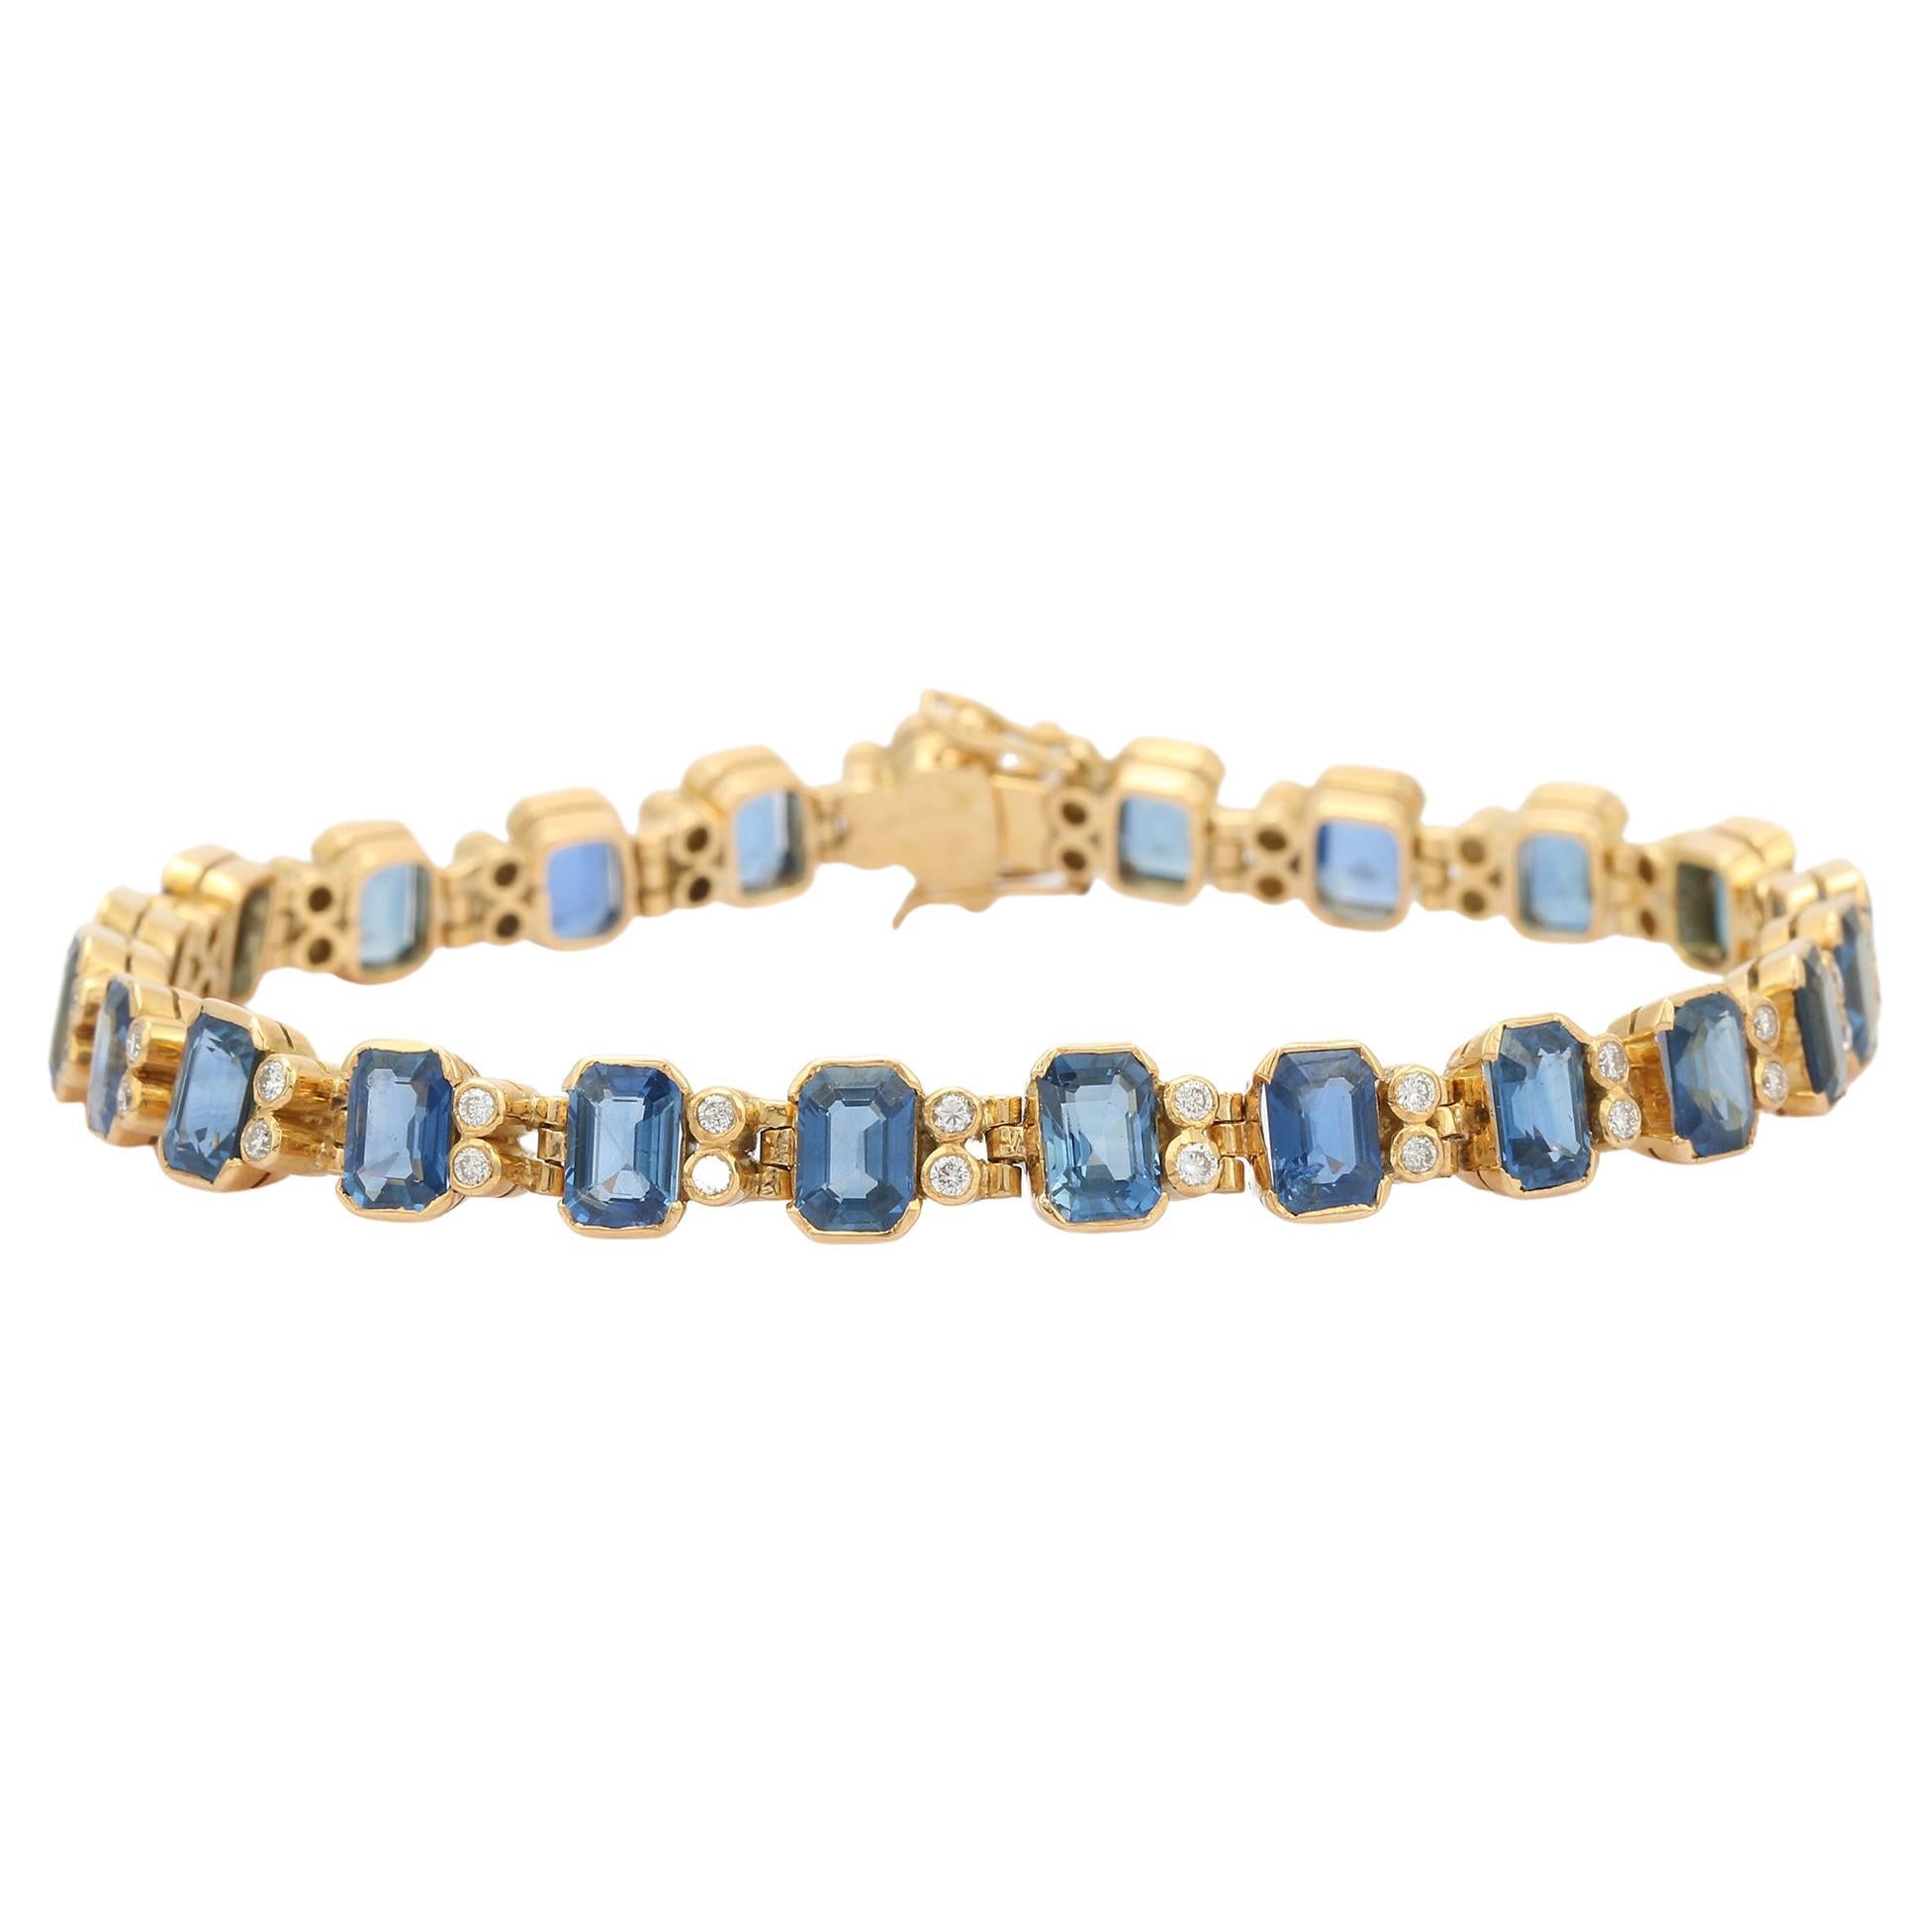 25.5 Carat Sapphire and Diamond Bezel Set Tennis Bracelet in 18K Yellow Gold